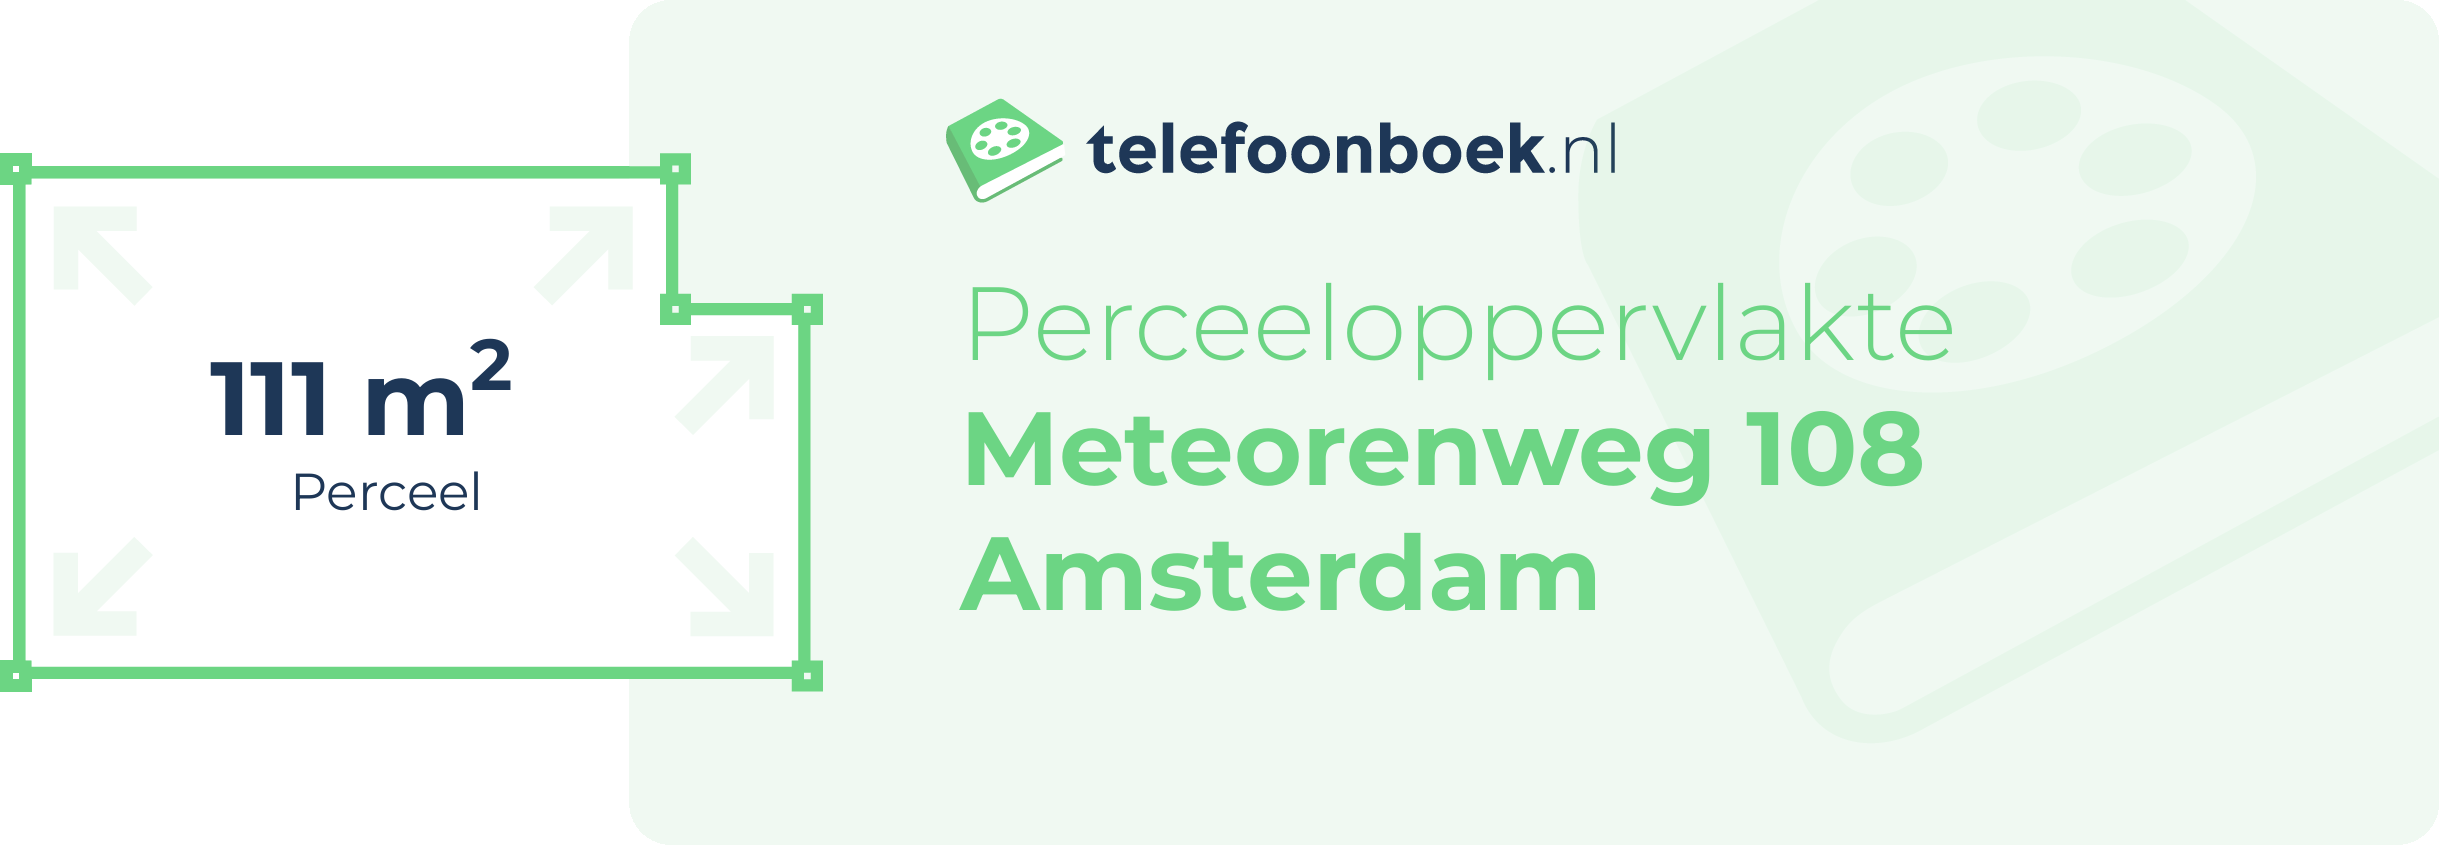 Perceeloppervlakte Meteorenweg 108 Amsterdam